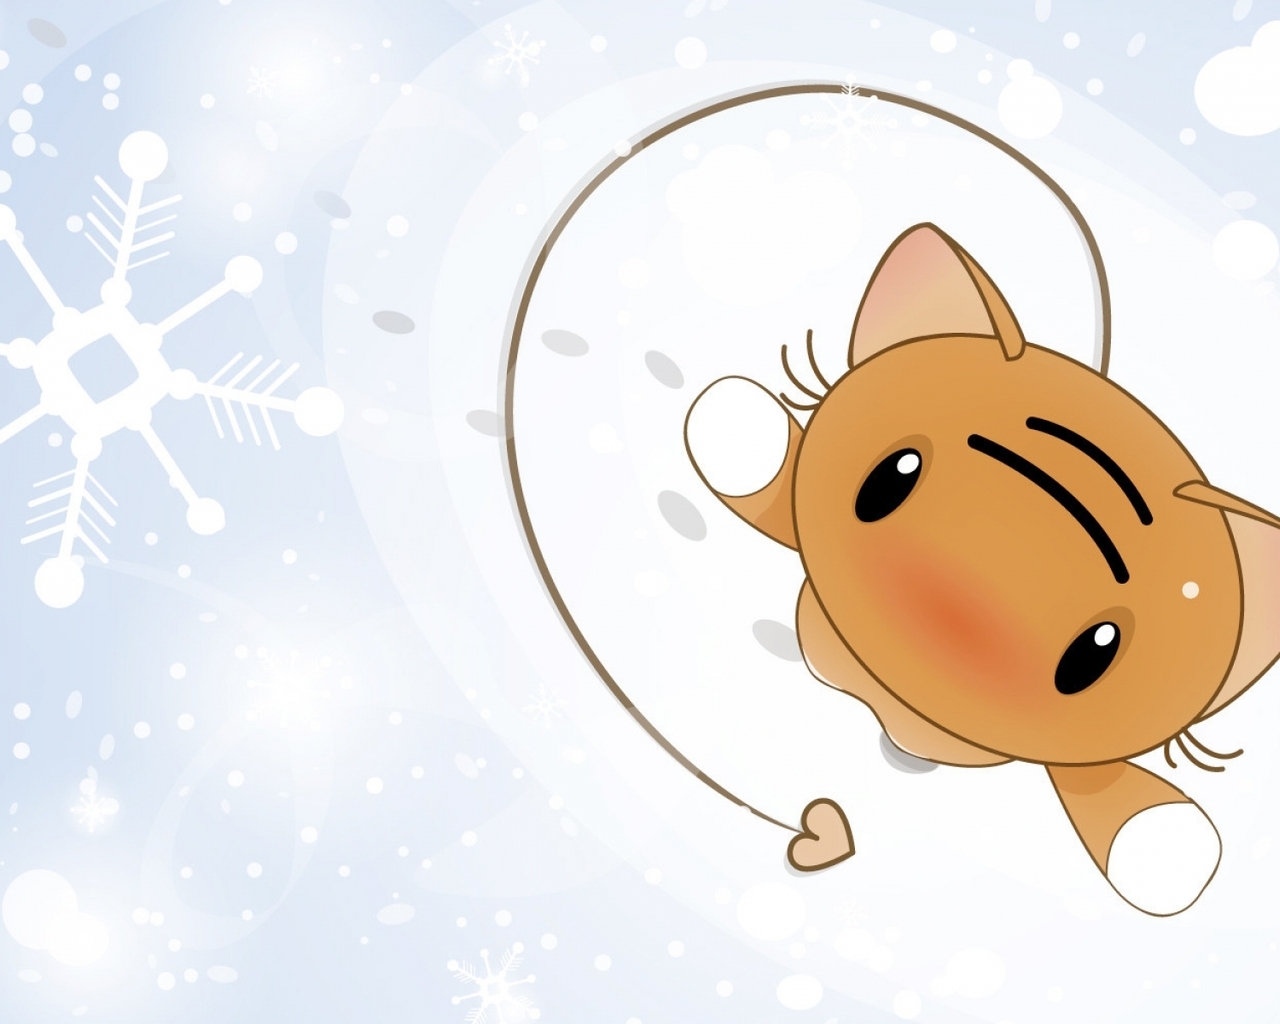 Image: Cat, snow, snowflake, white, footprints, drawing